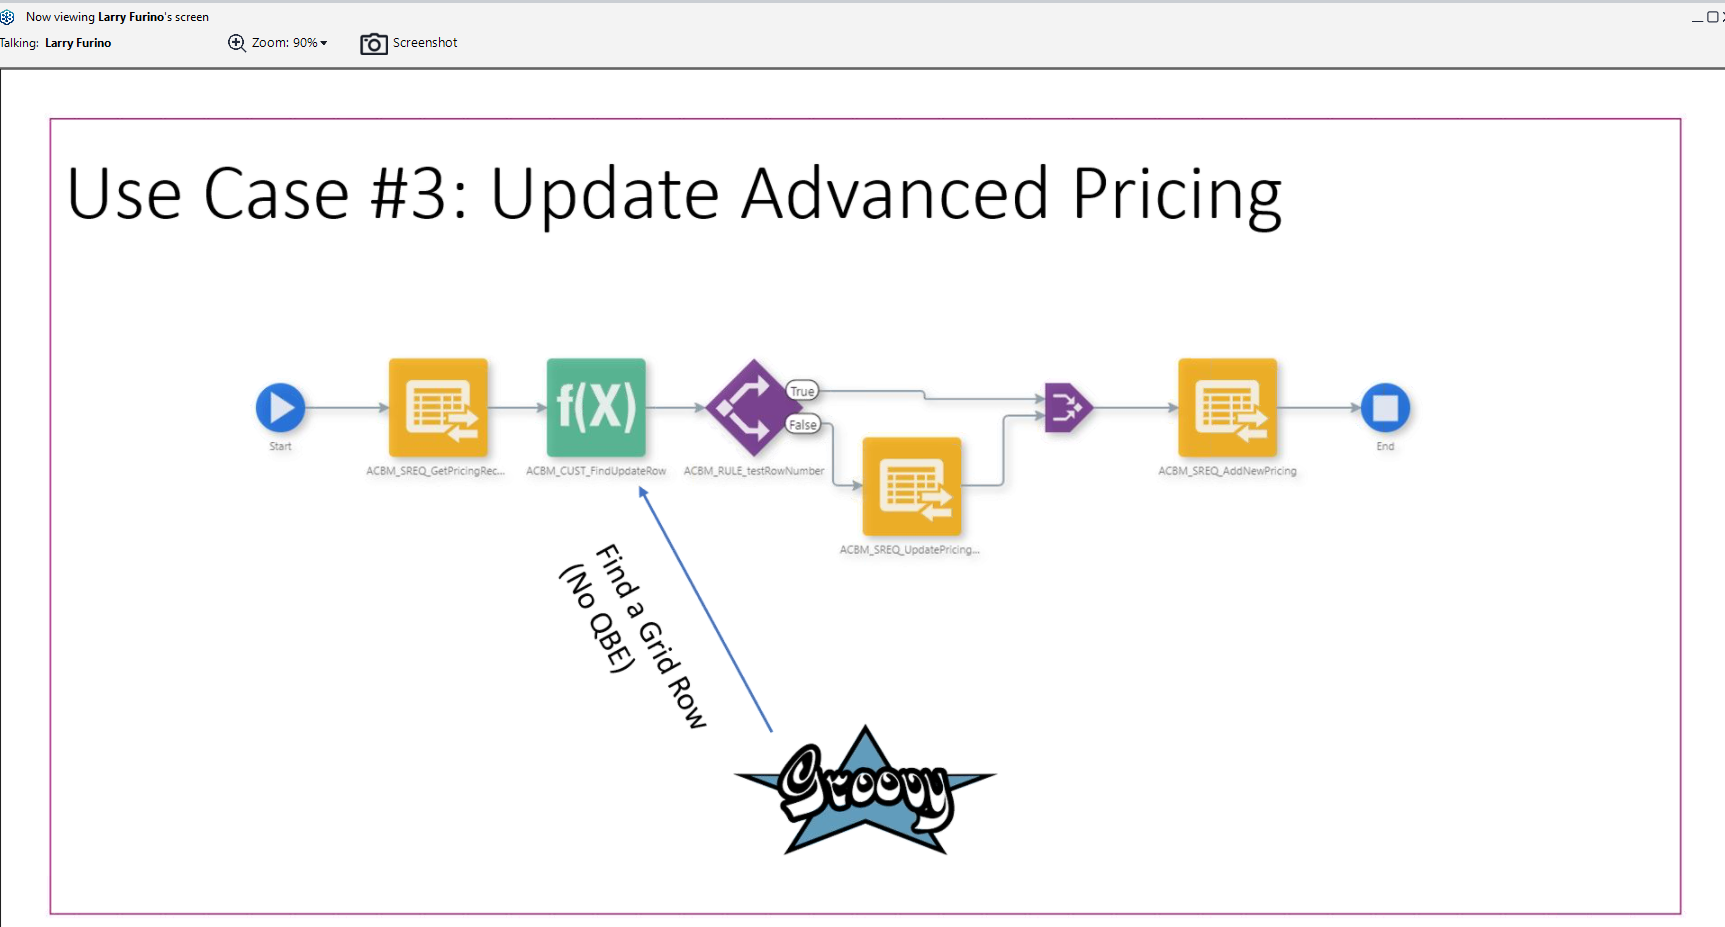 Use Case # 3 Update Advanced Pricing